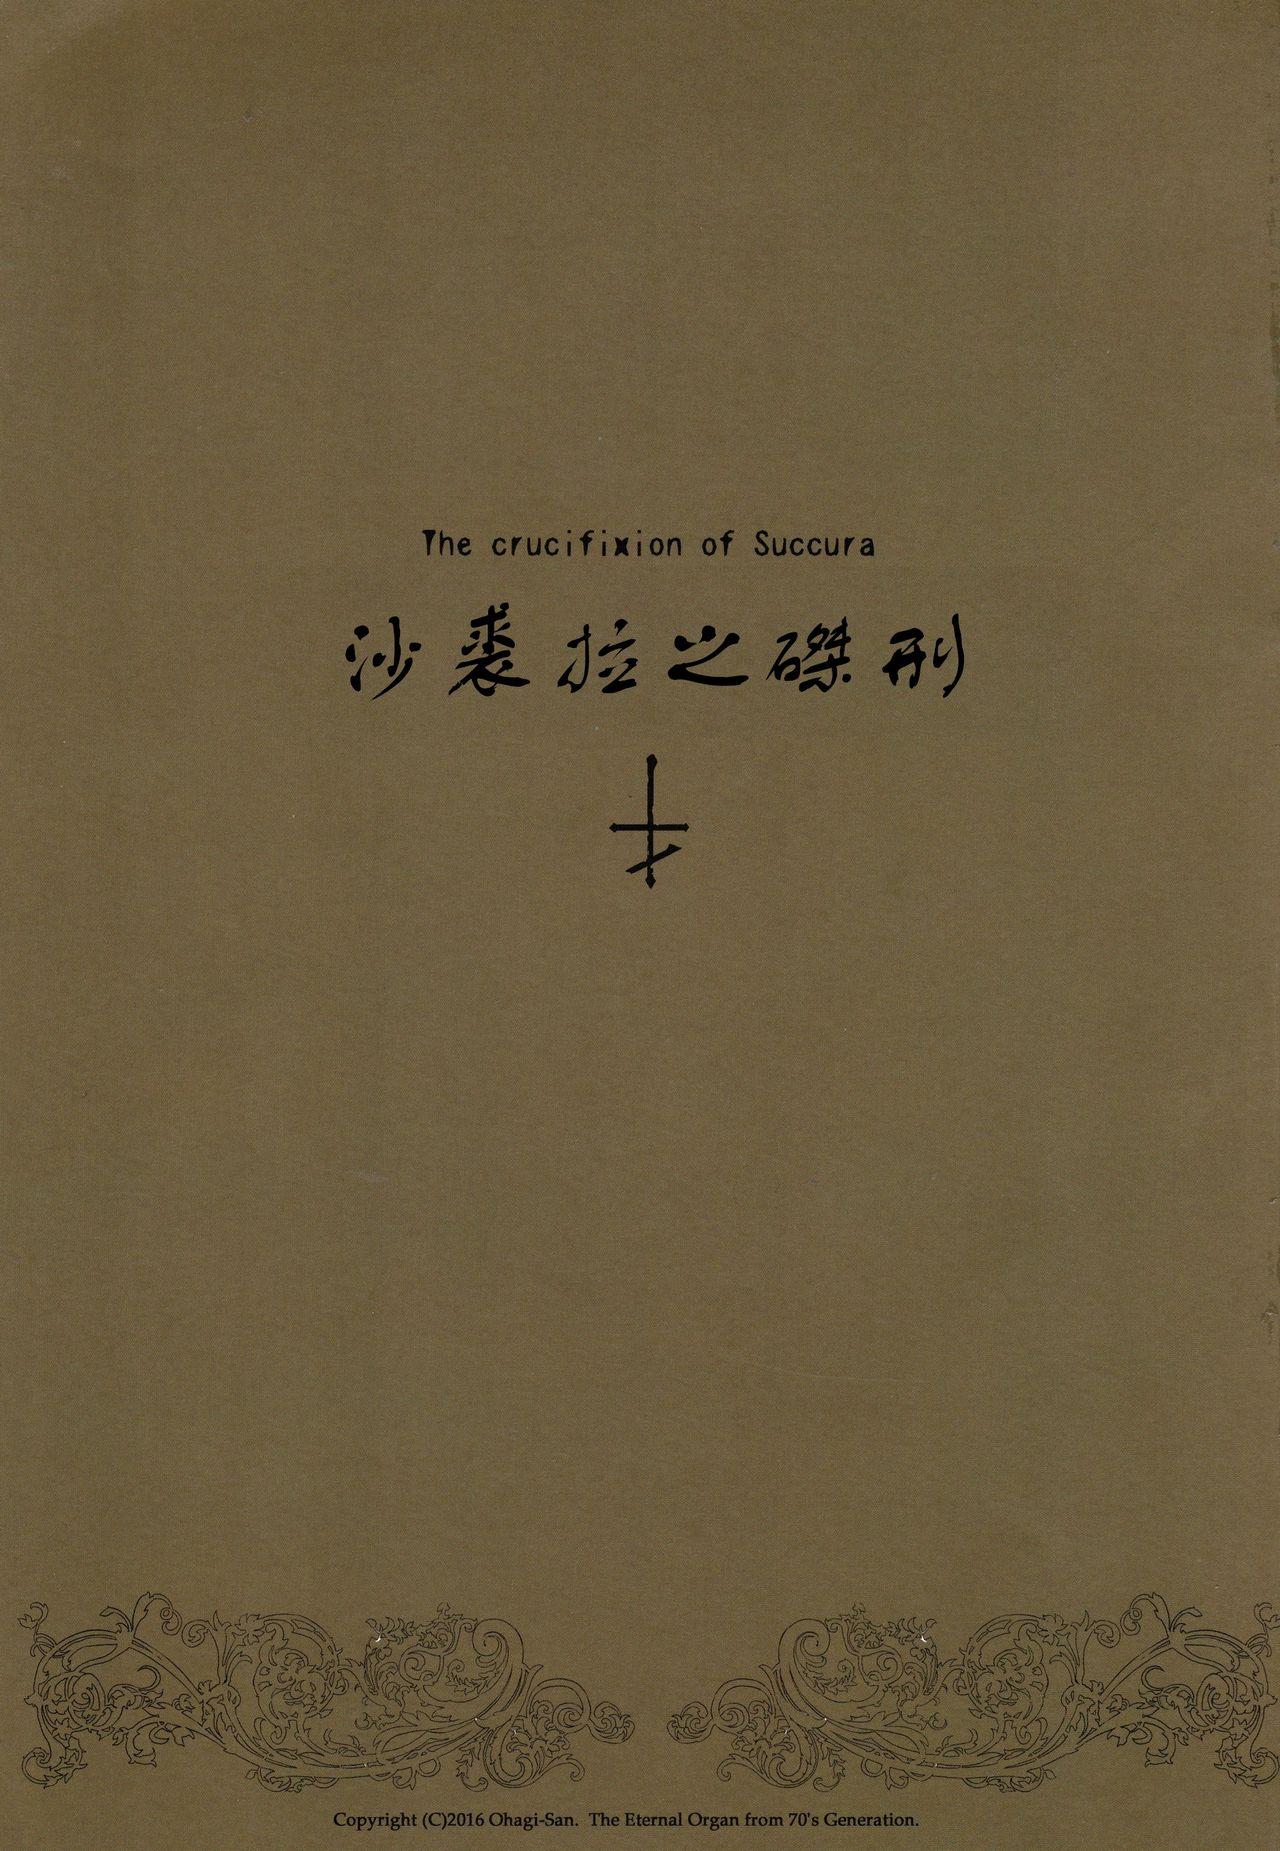 Big breasts (C90) [70 Nenshiki Yuukyuu Kikan (Ohagi-san)] Succura no Takkei - The crucifixion of Succura (Bloodborne)（chinese）[众筹填坑教导院] - Bloodborne Body - Page 2